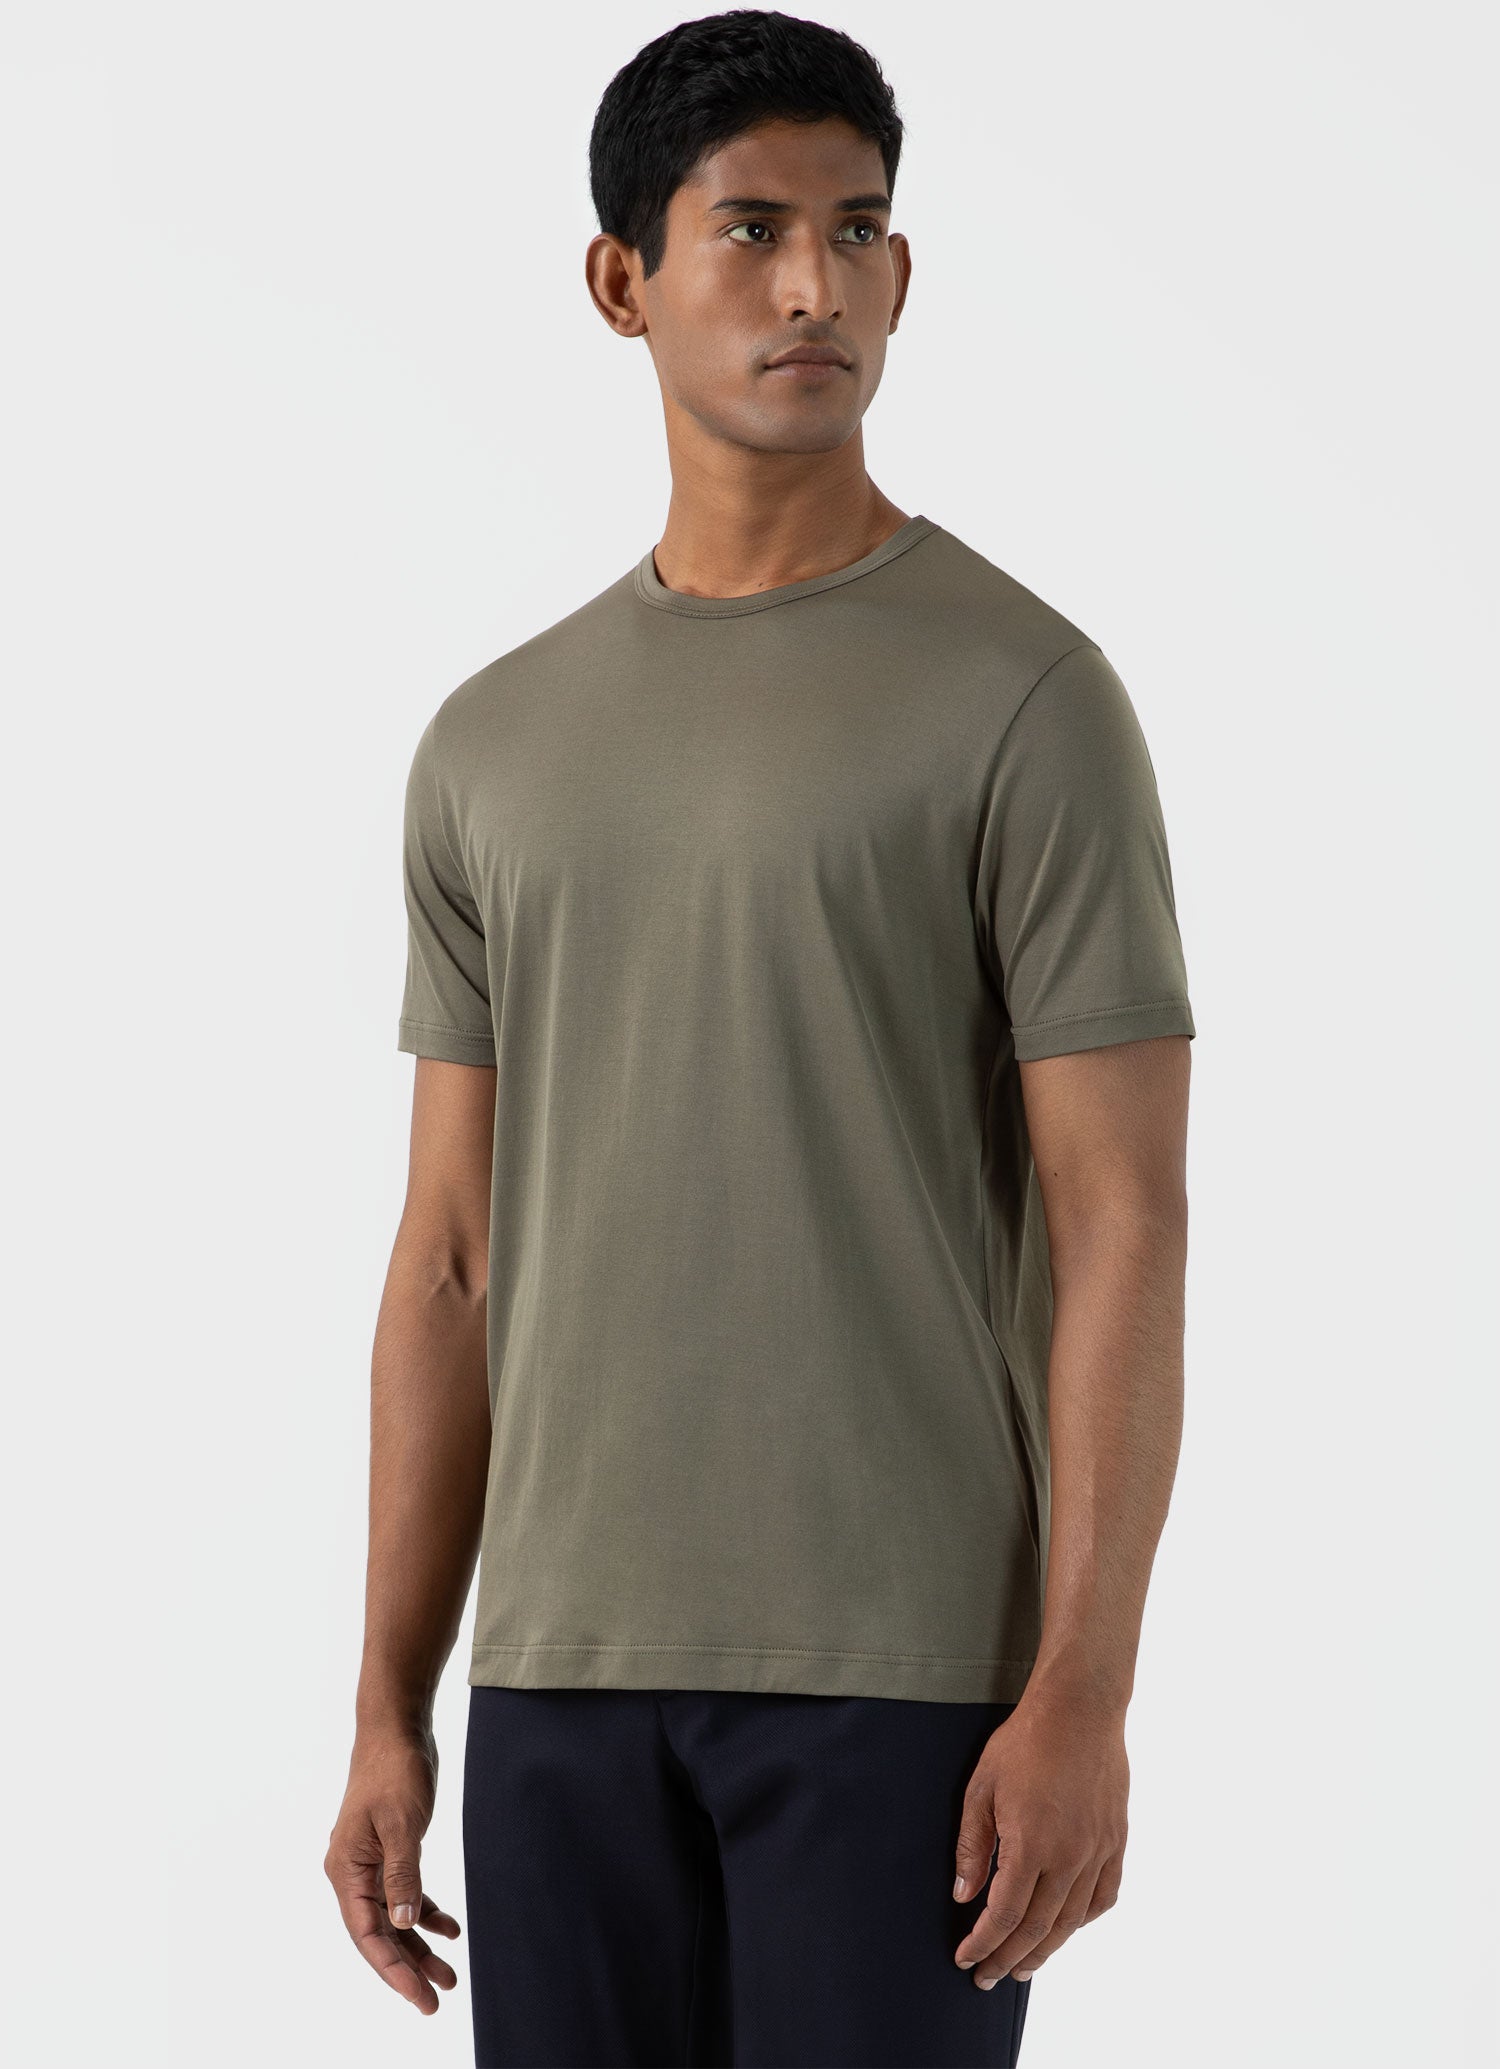 Men\'s Classic T-shirt Dark in Olive | Sunspel